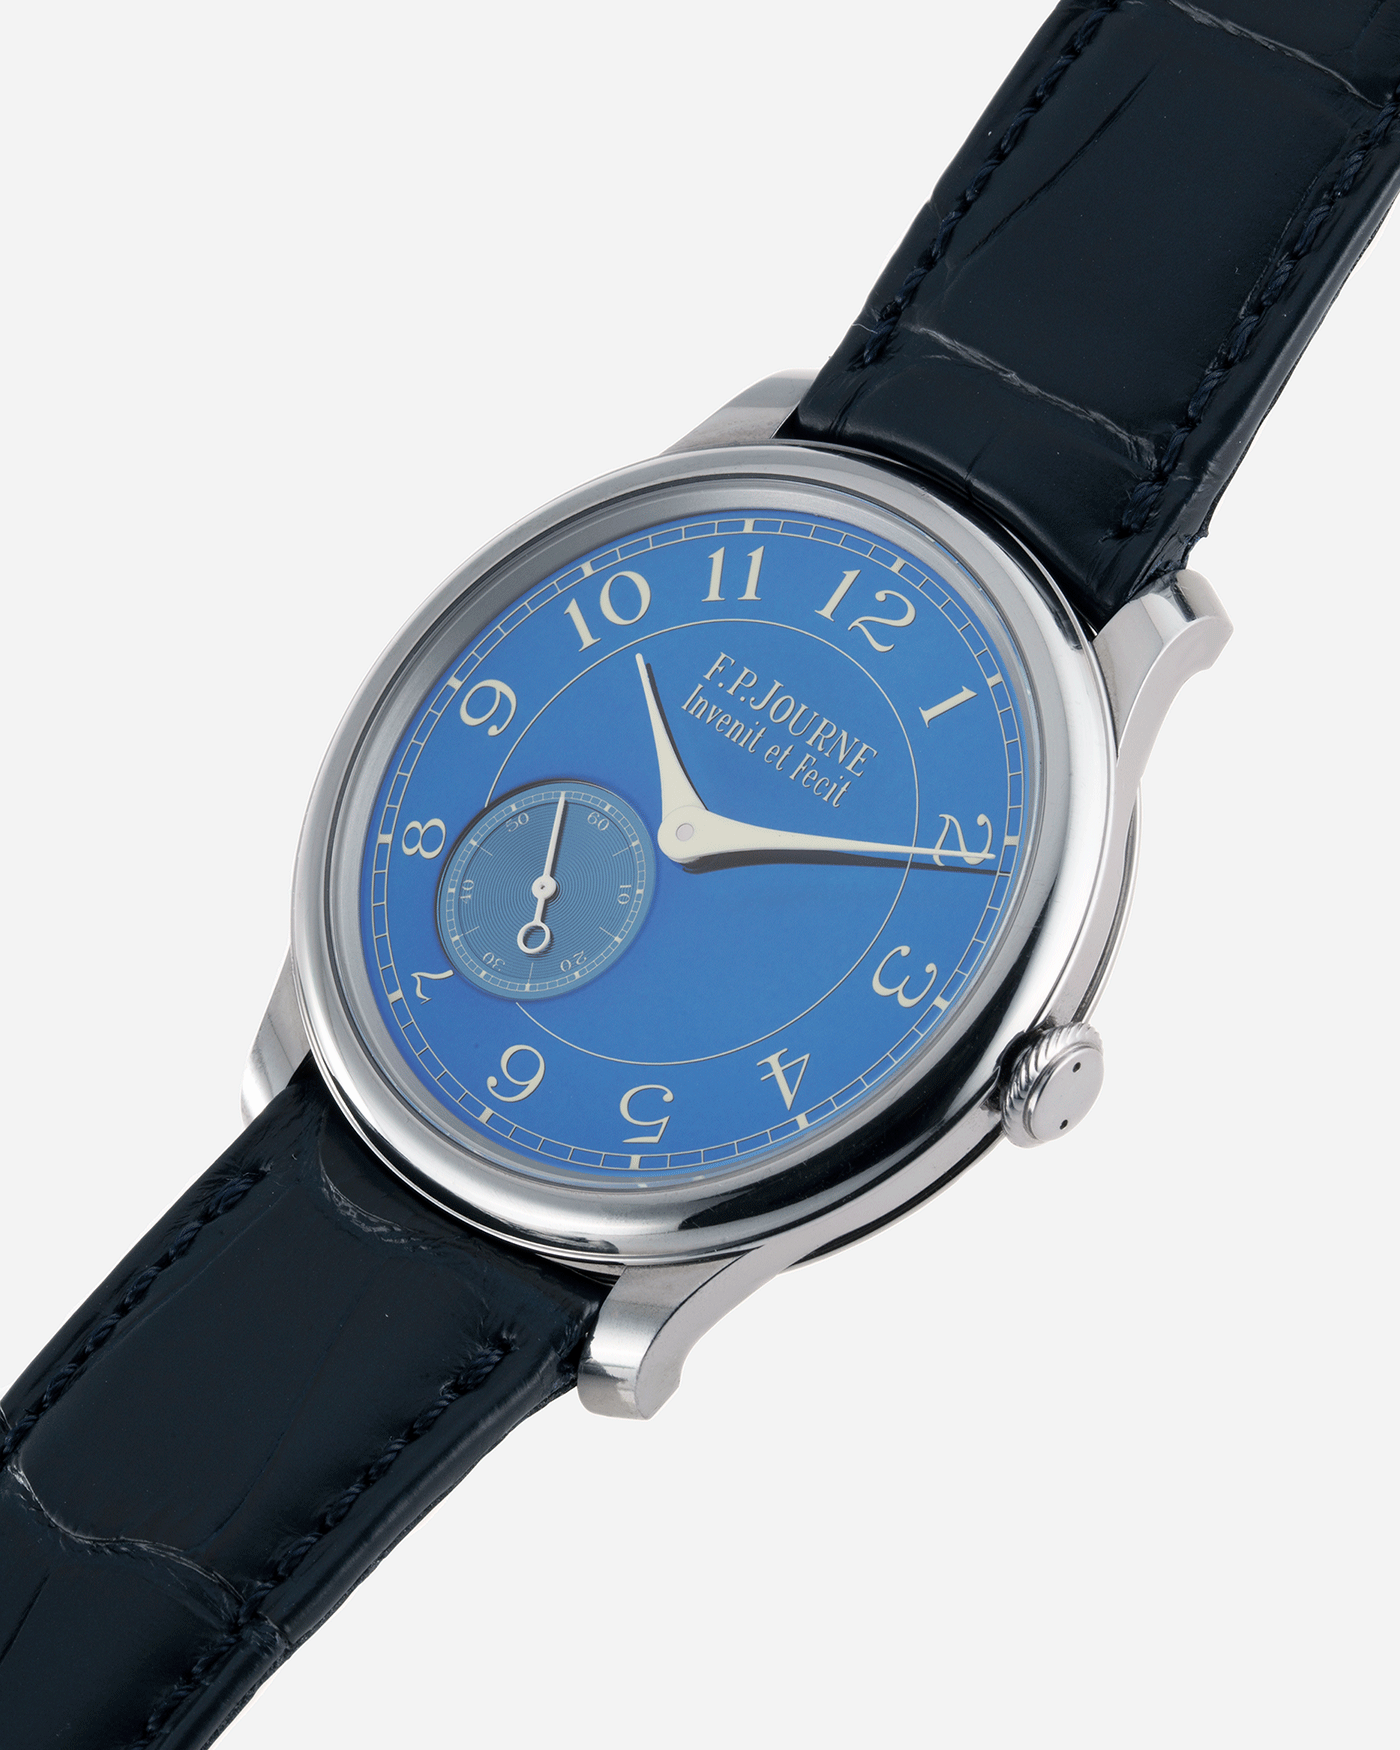 Brand: F.P. Journe Year: 2016 Model: Chronometre Bleu Material: Tantalum Movement: in-house FPJ calibre 1304 Case Diameter: 39mm Bracelet/Strap: F.P. Journe Blue Alligator and Tantalum Tang Buckle